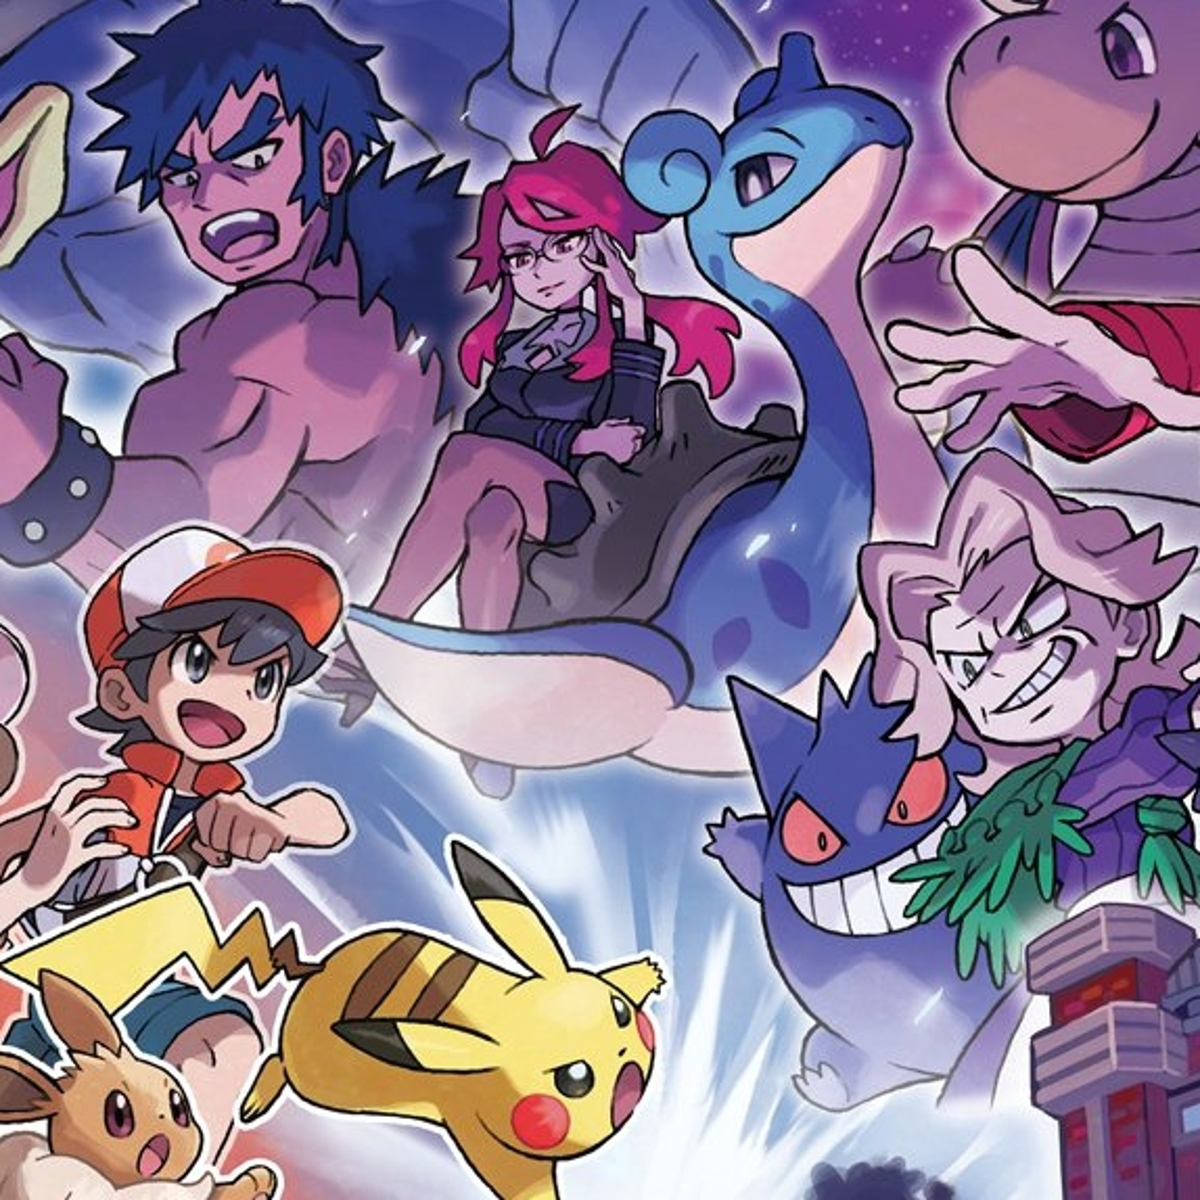 Pokémon Let's Go Pikachu & Eevee - All Mega Evolutions + Moves 